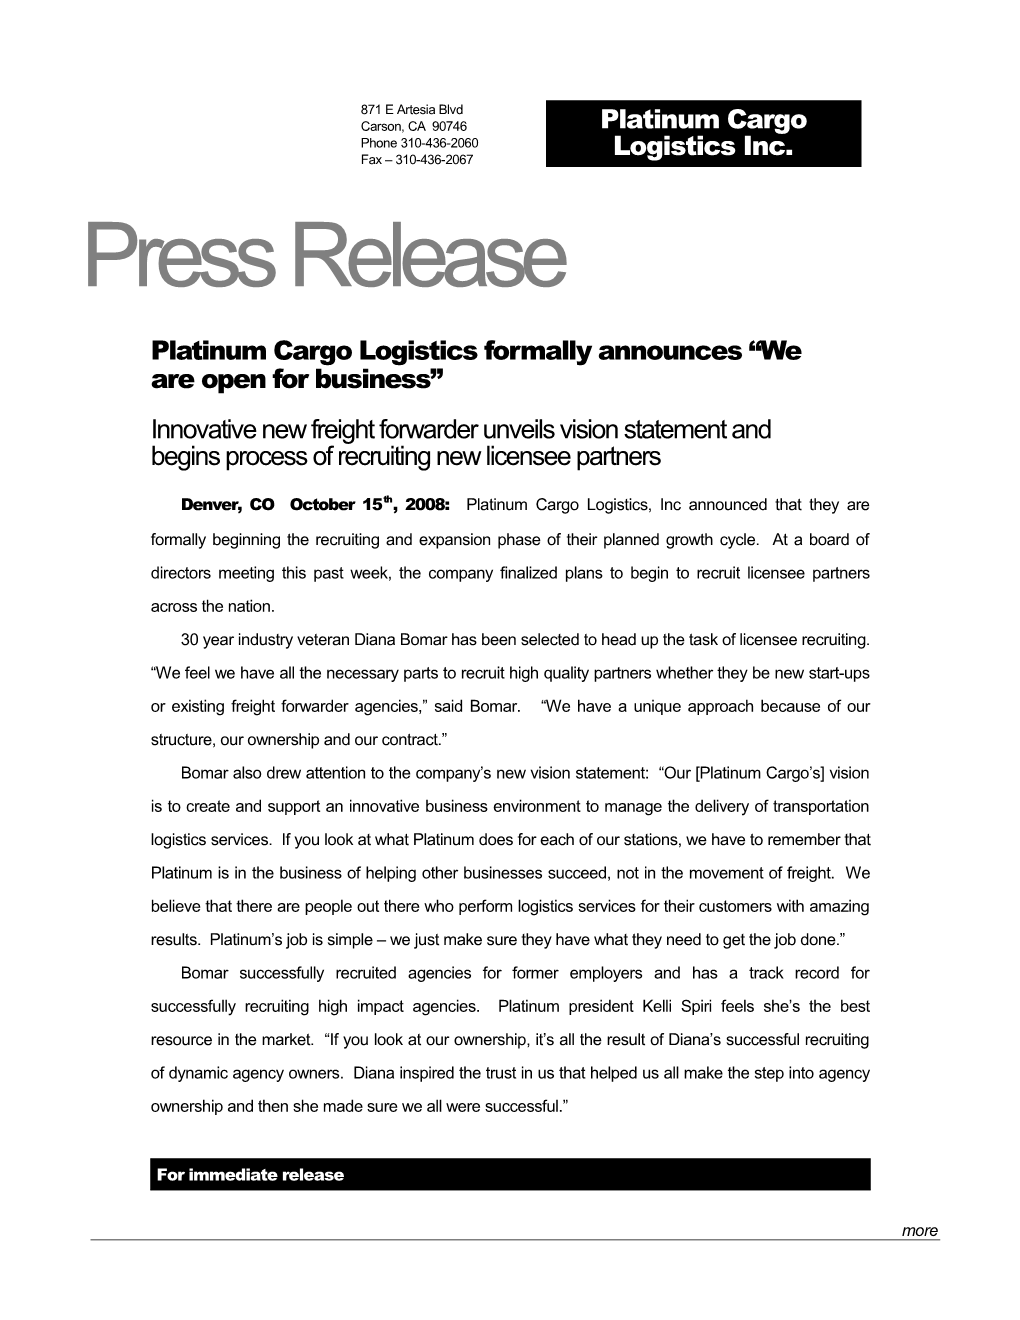 Page 1Platinum Cargo Logistics Open for Business